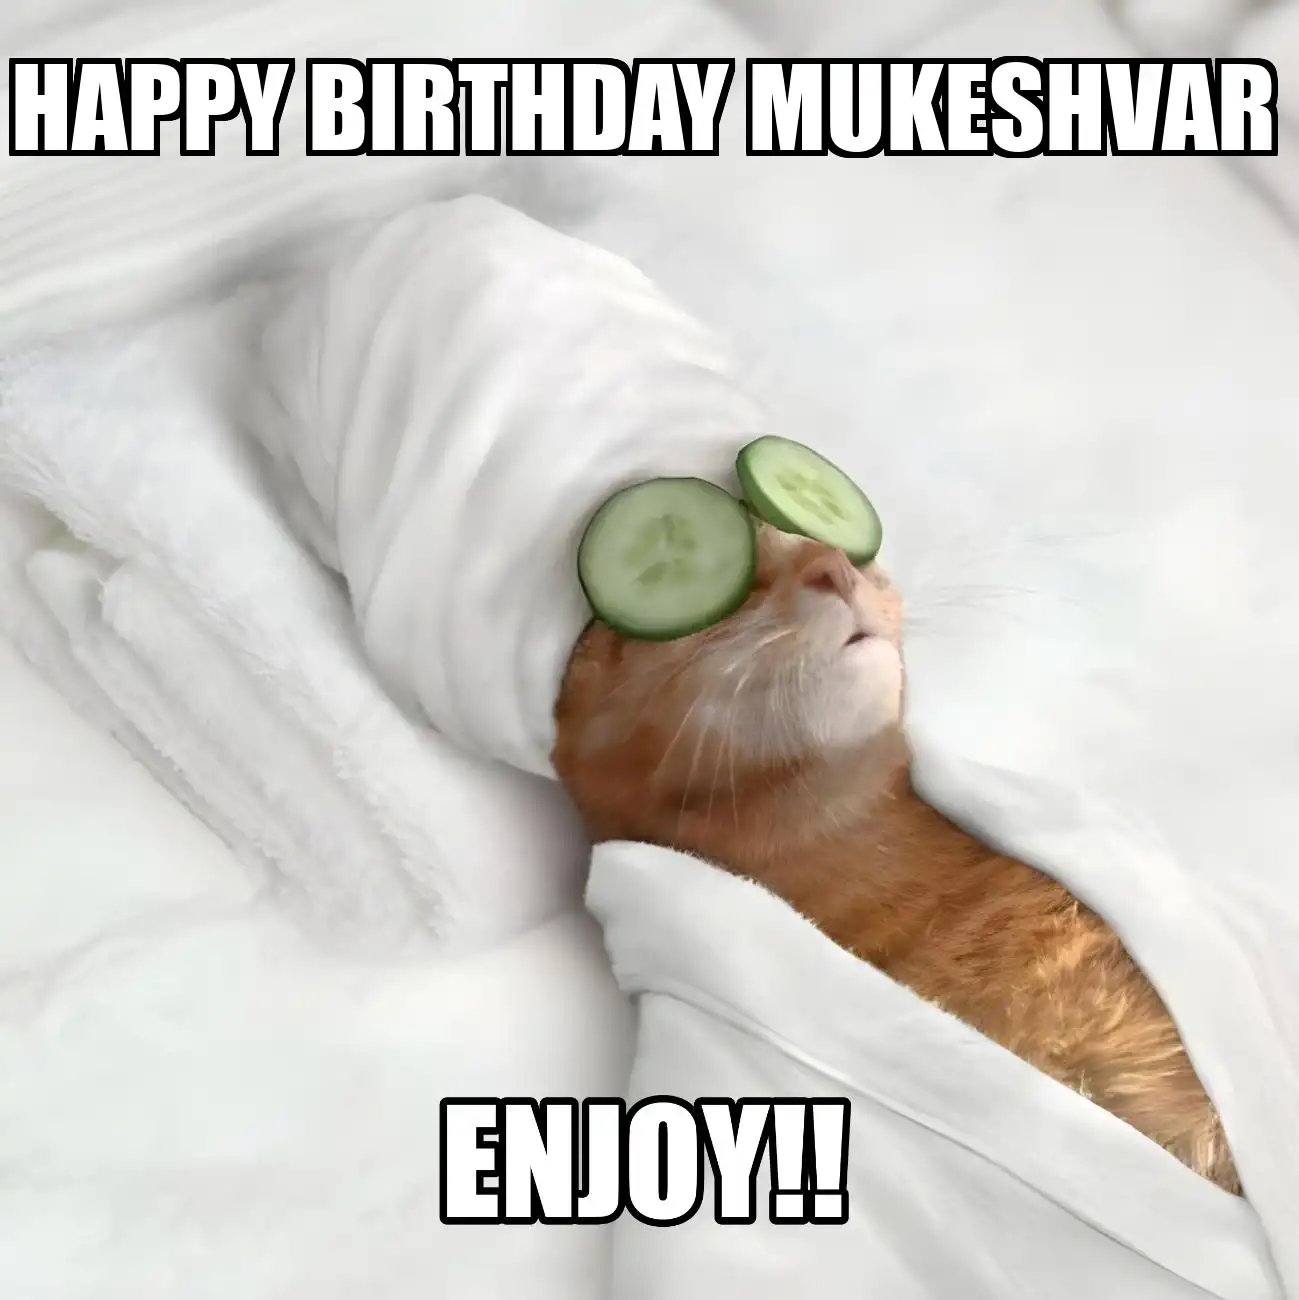 Happy Birthday Mukeshvar Enjoy Cat Meme